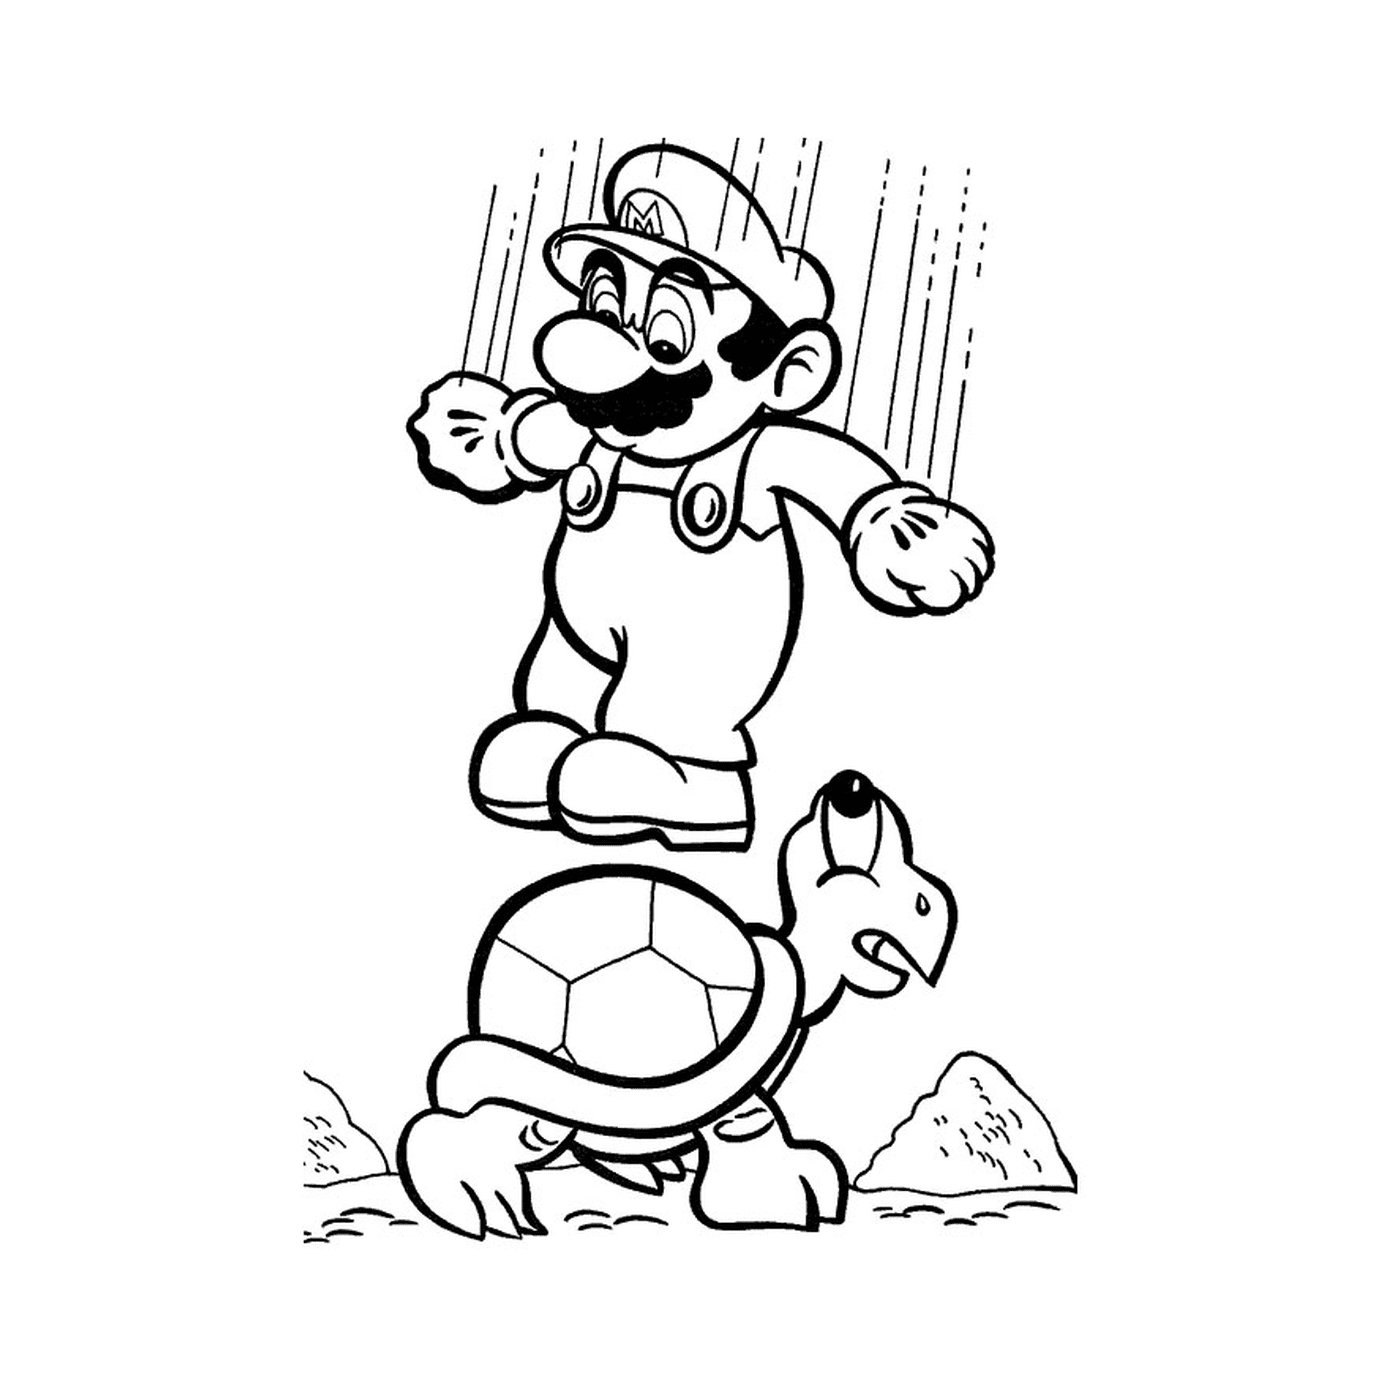  Mario e una tartaruga 